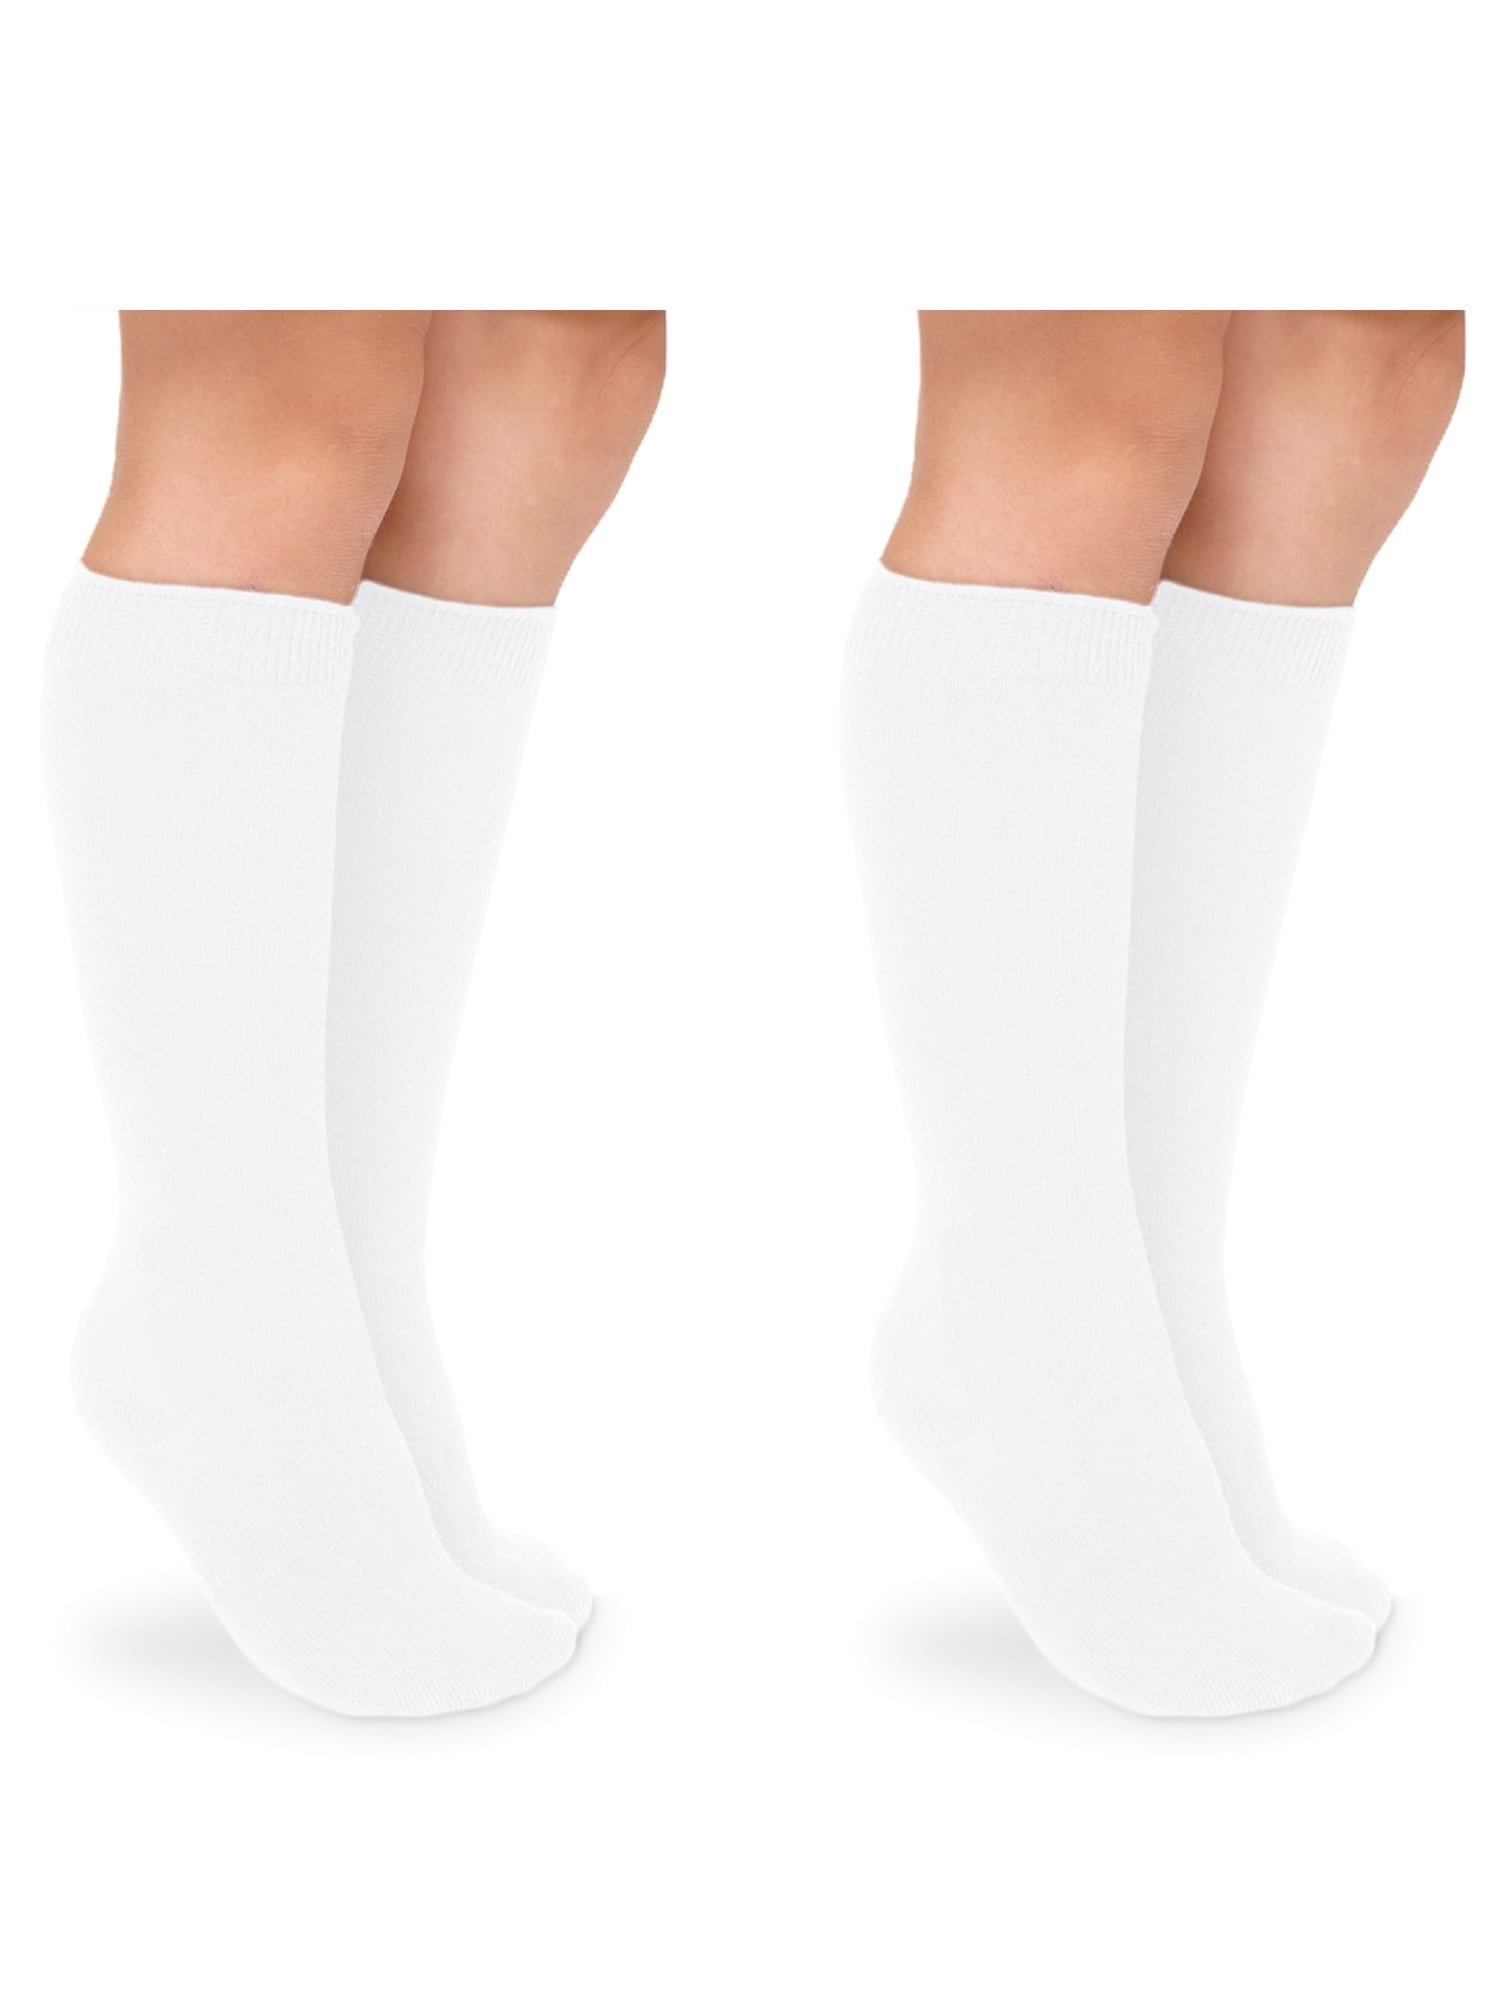 Knee High Bow Socks Girls Fashion Cotton Children Kids School 2 and 4 Pair Packs